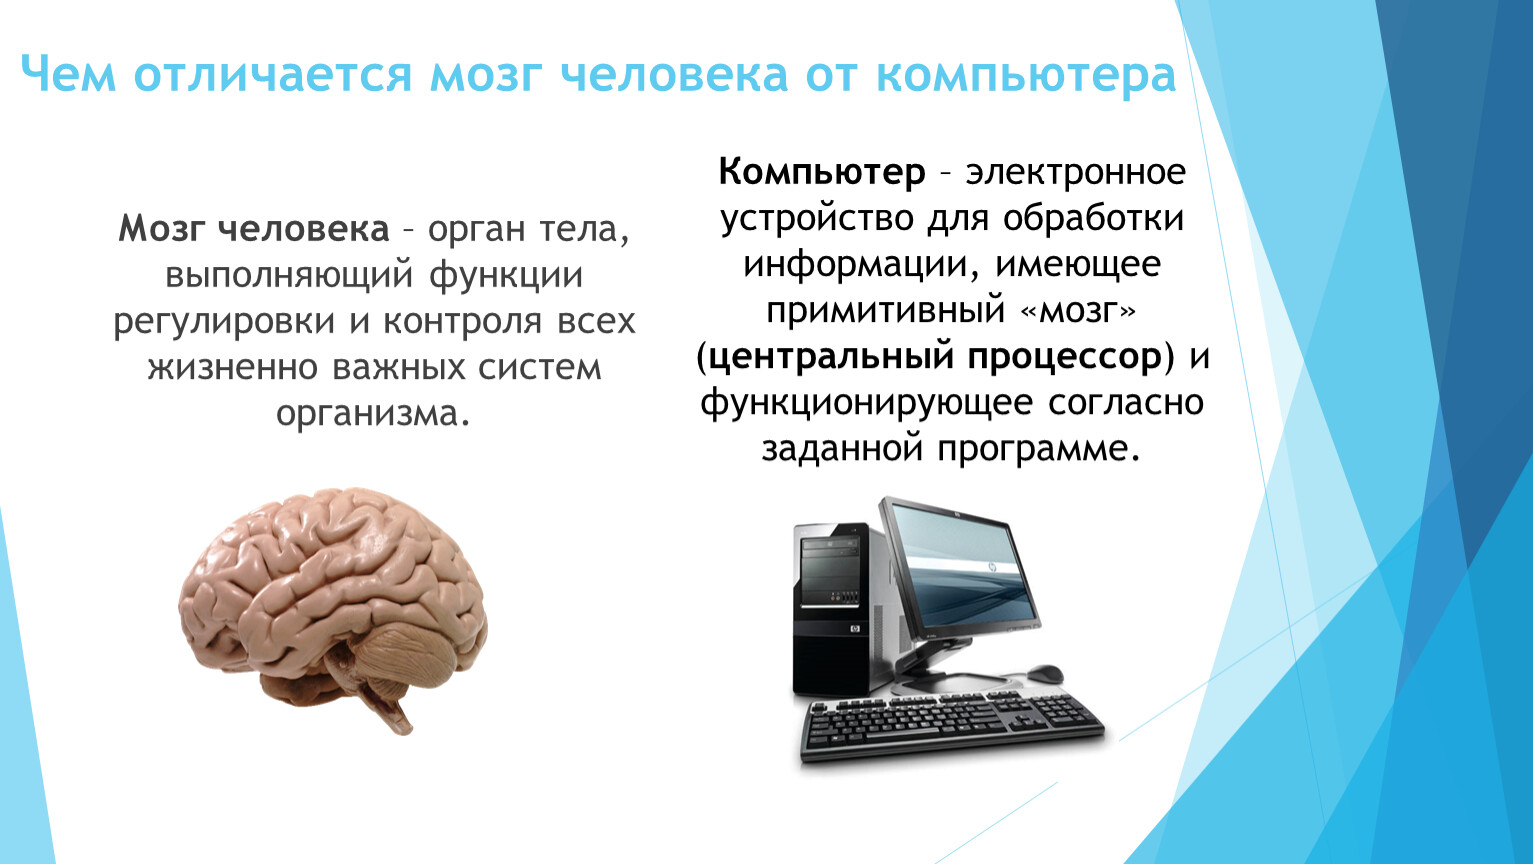 Человеческий мозг и компьютер. Мозг компьютера. Компьютер и человеческий мозг. Отличие человека от компьютера. Различия человека и компьютера.